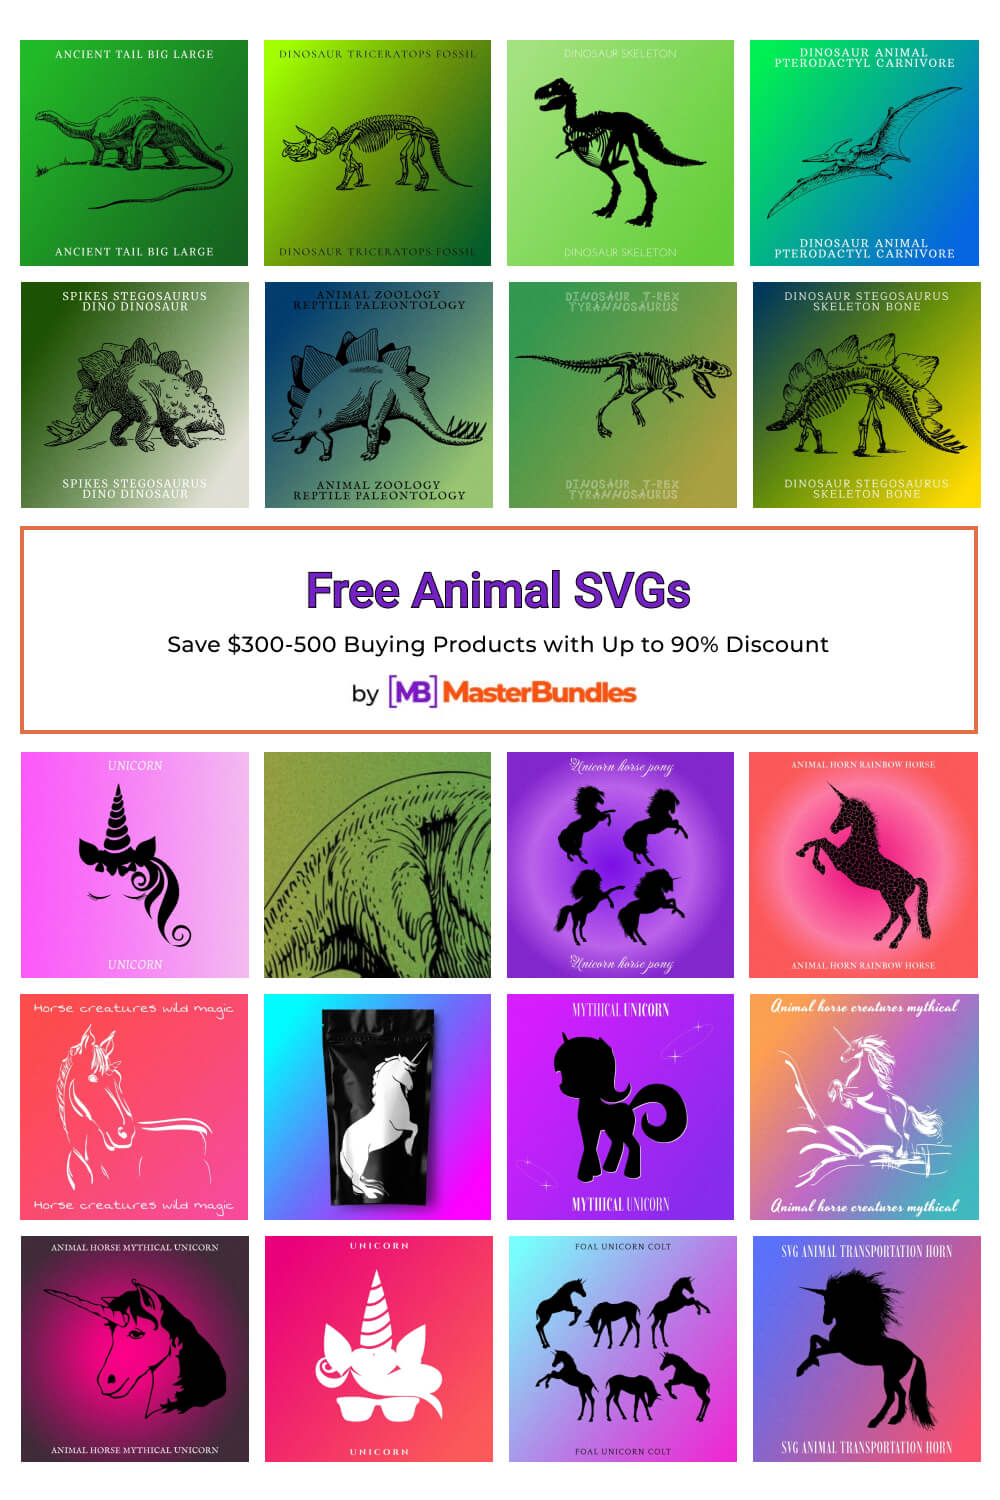 free animal svgs pinterest image.